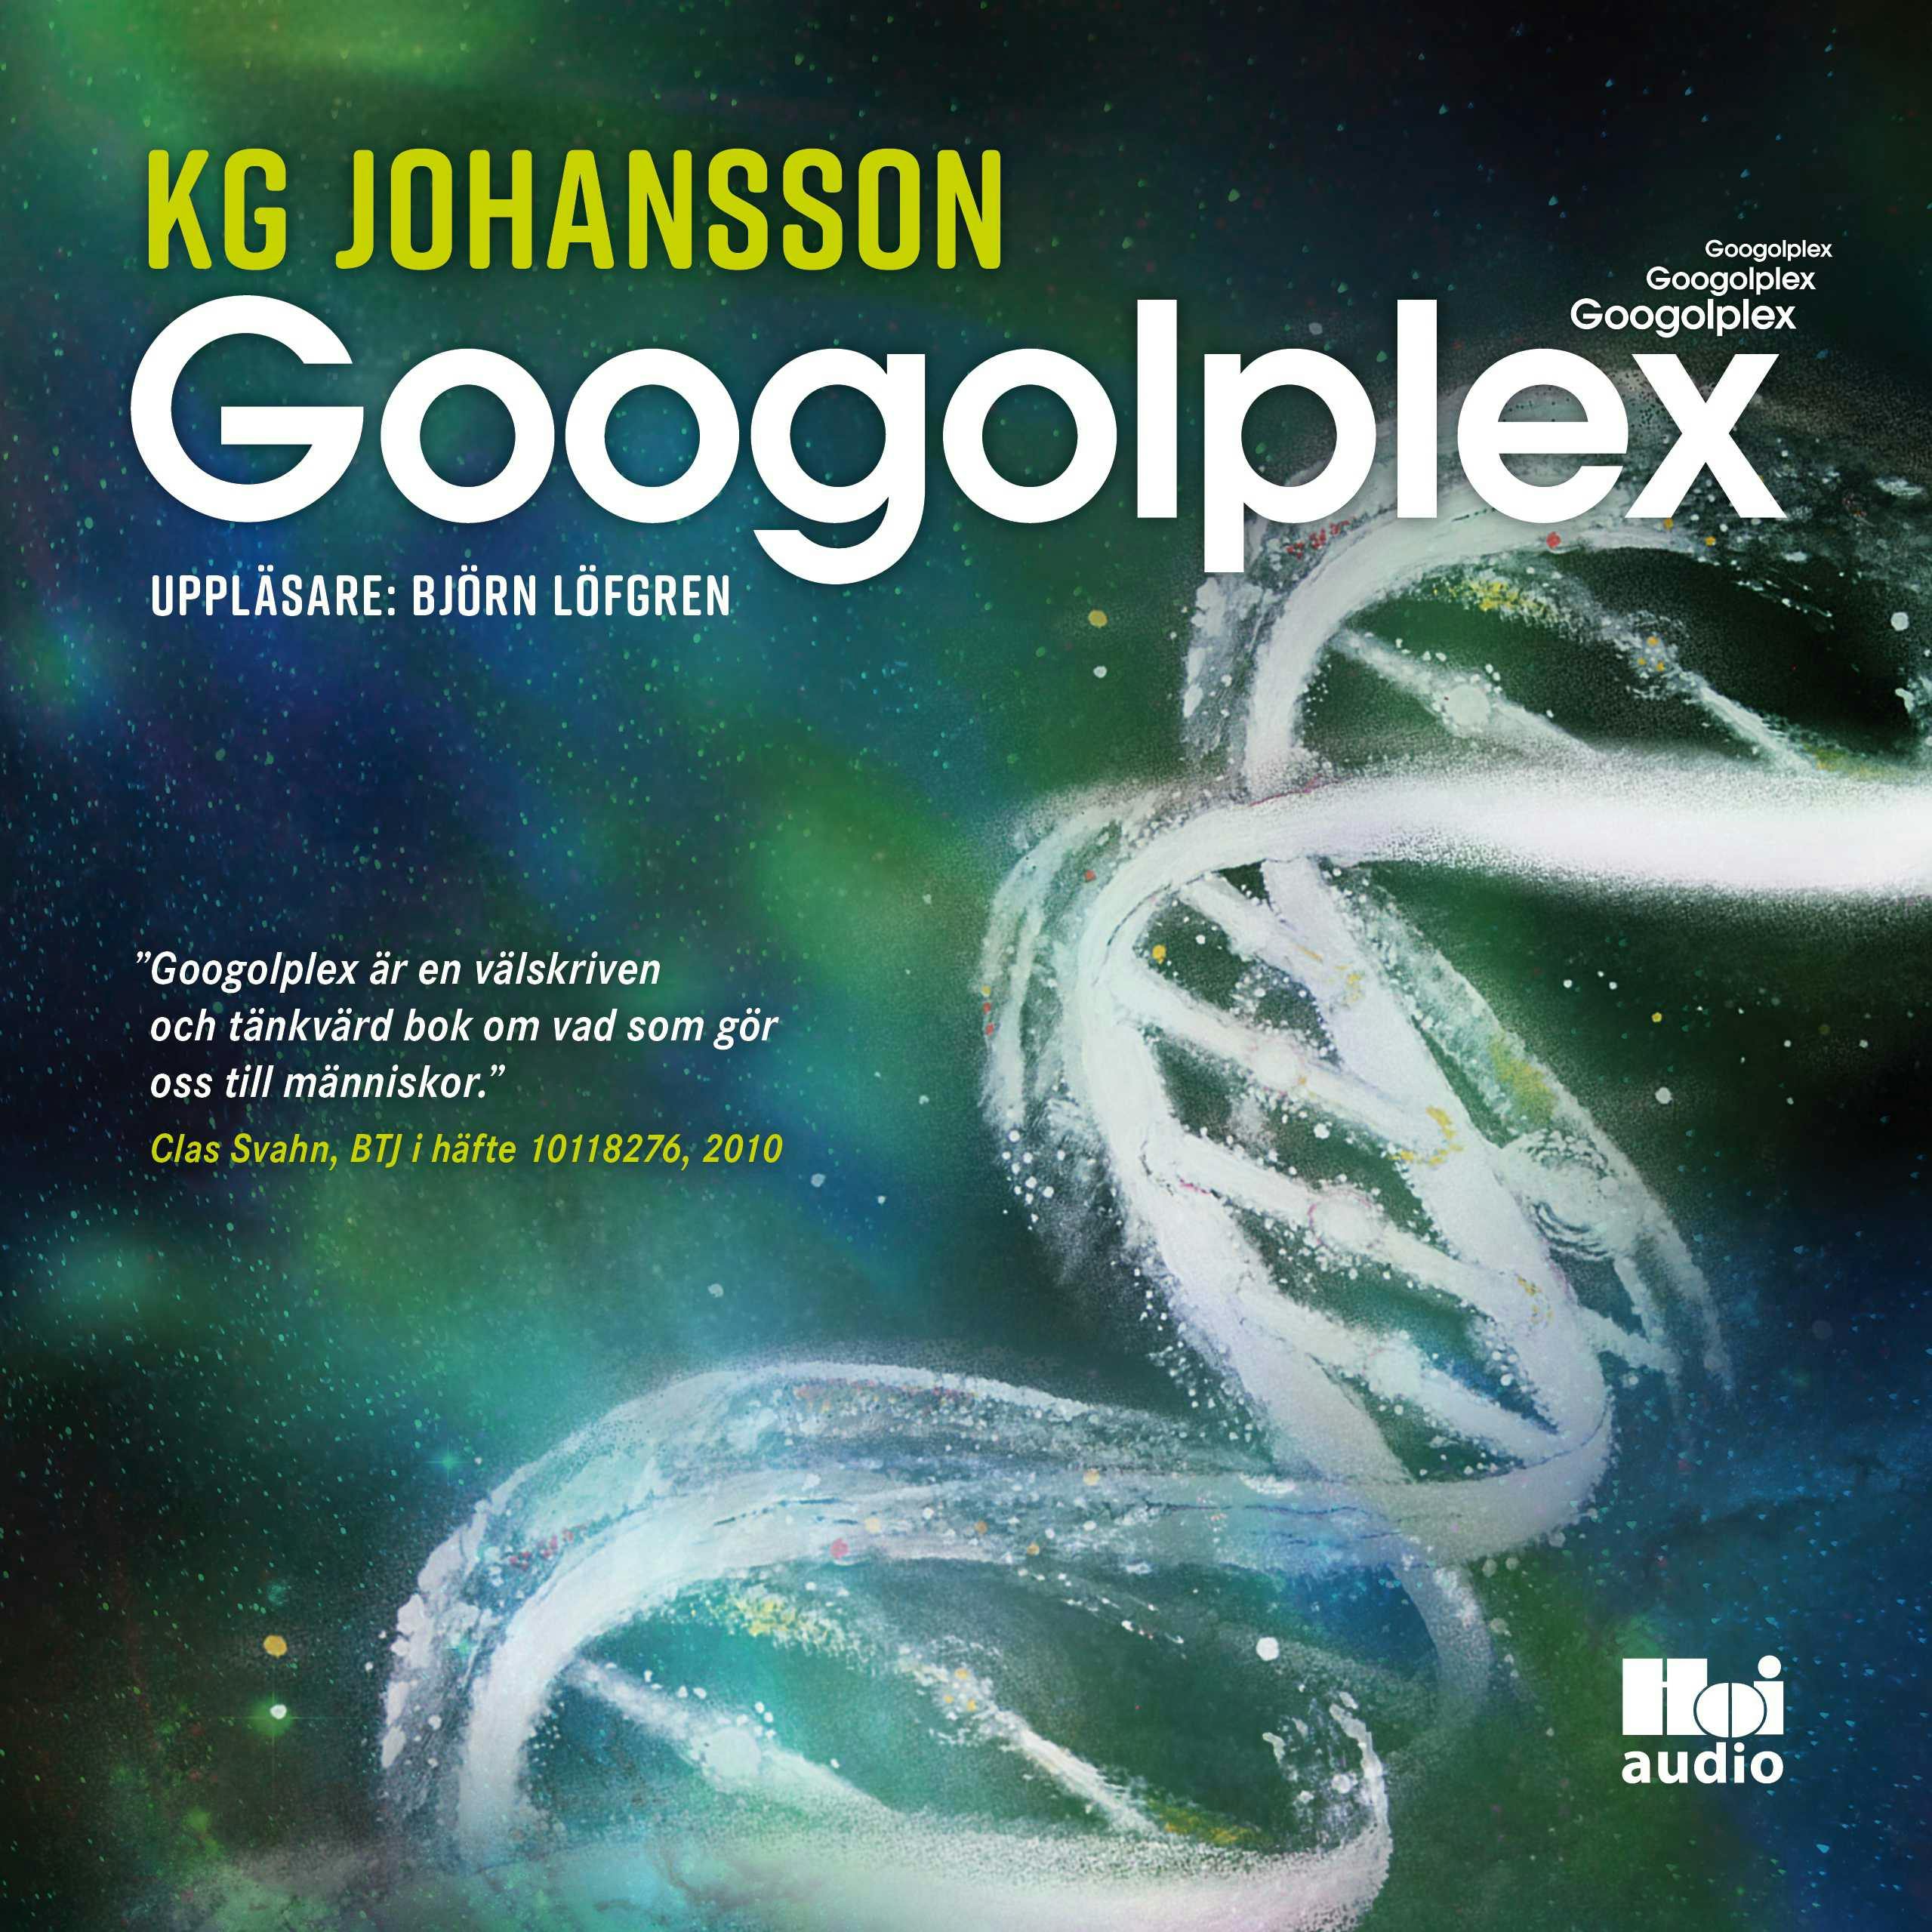 Googolplex - undefined